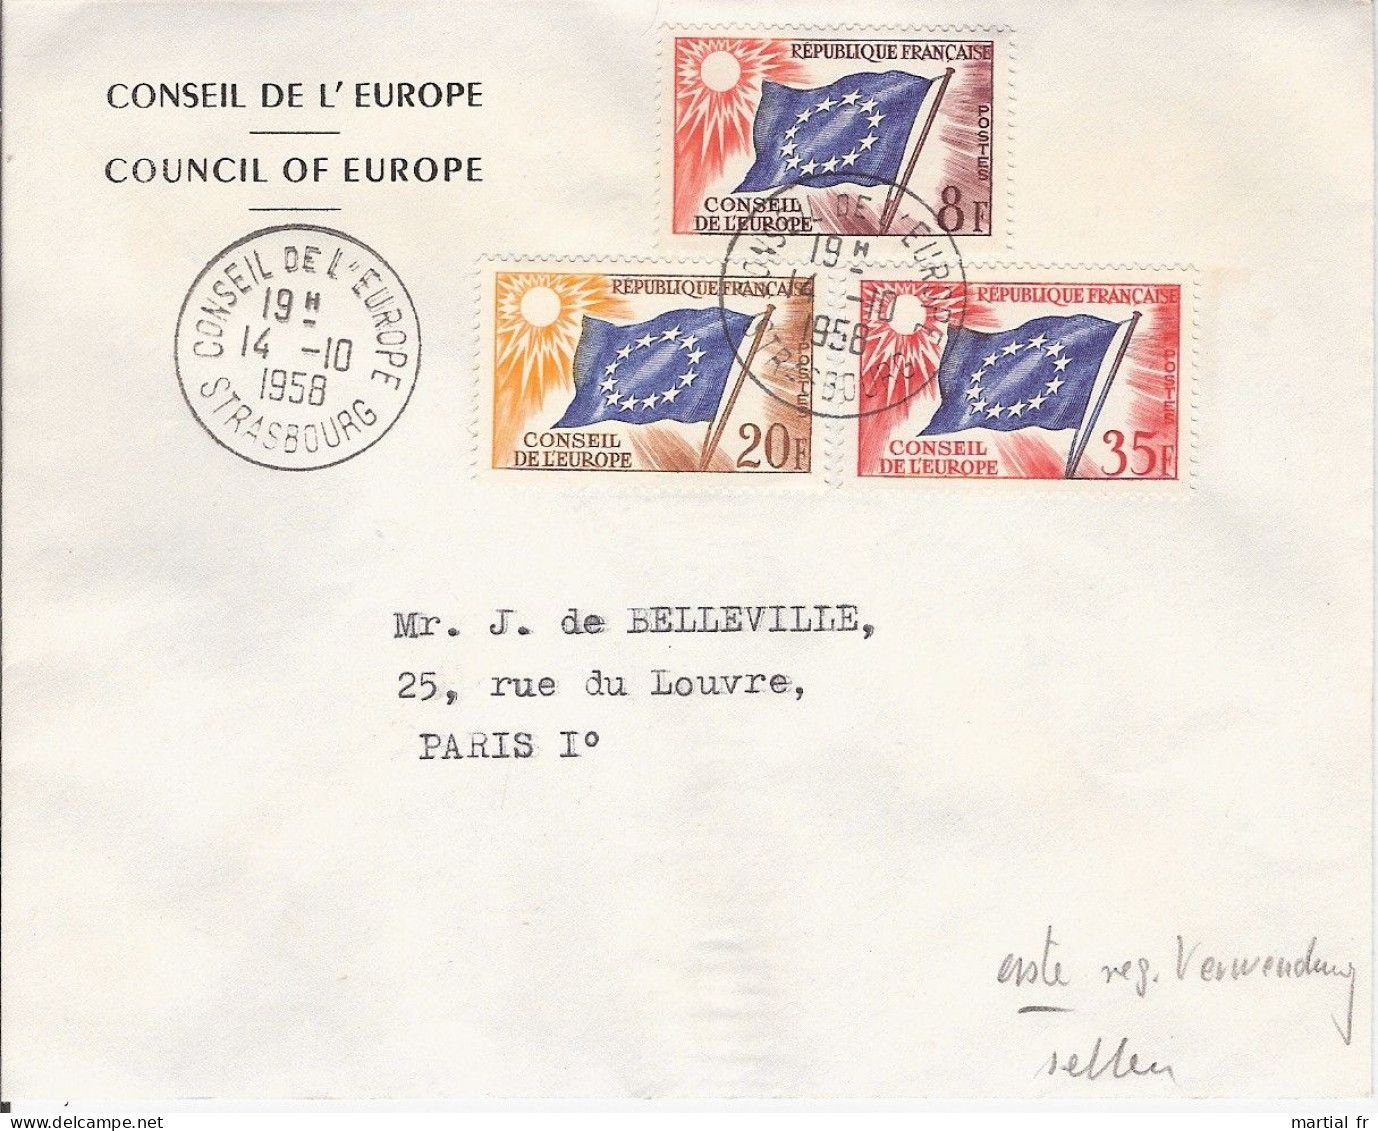 FRANCE CONSEIL EUROPE COUNCIL OF EUROPE 14 10 1958 1ERE DATE D UTILISATION DRAPEAU FAHNE FLAG RARE SELTEN - Covers & Documents